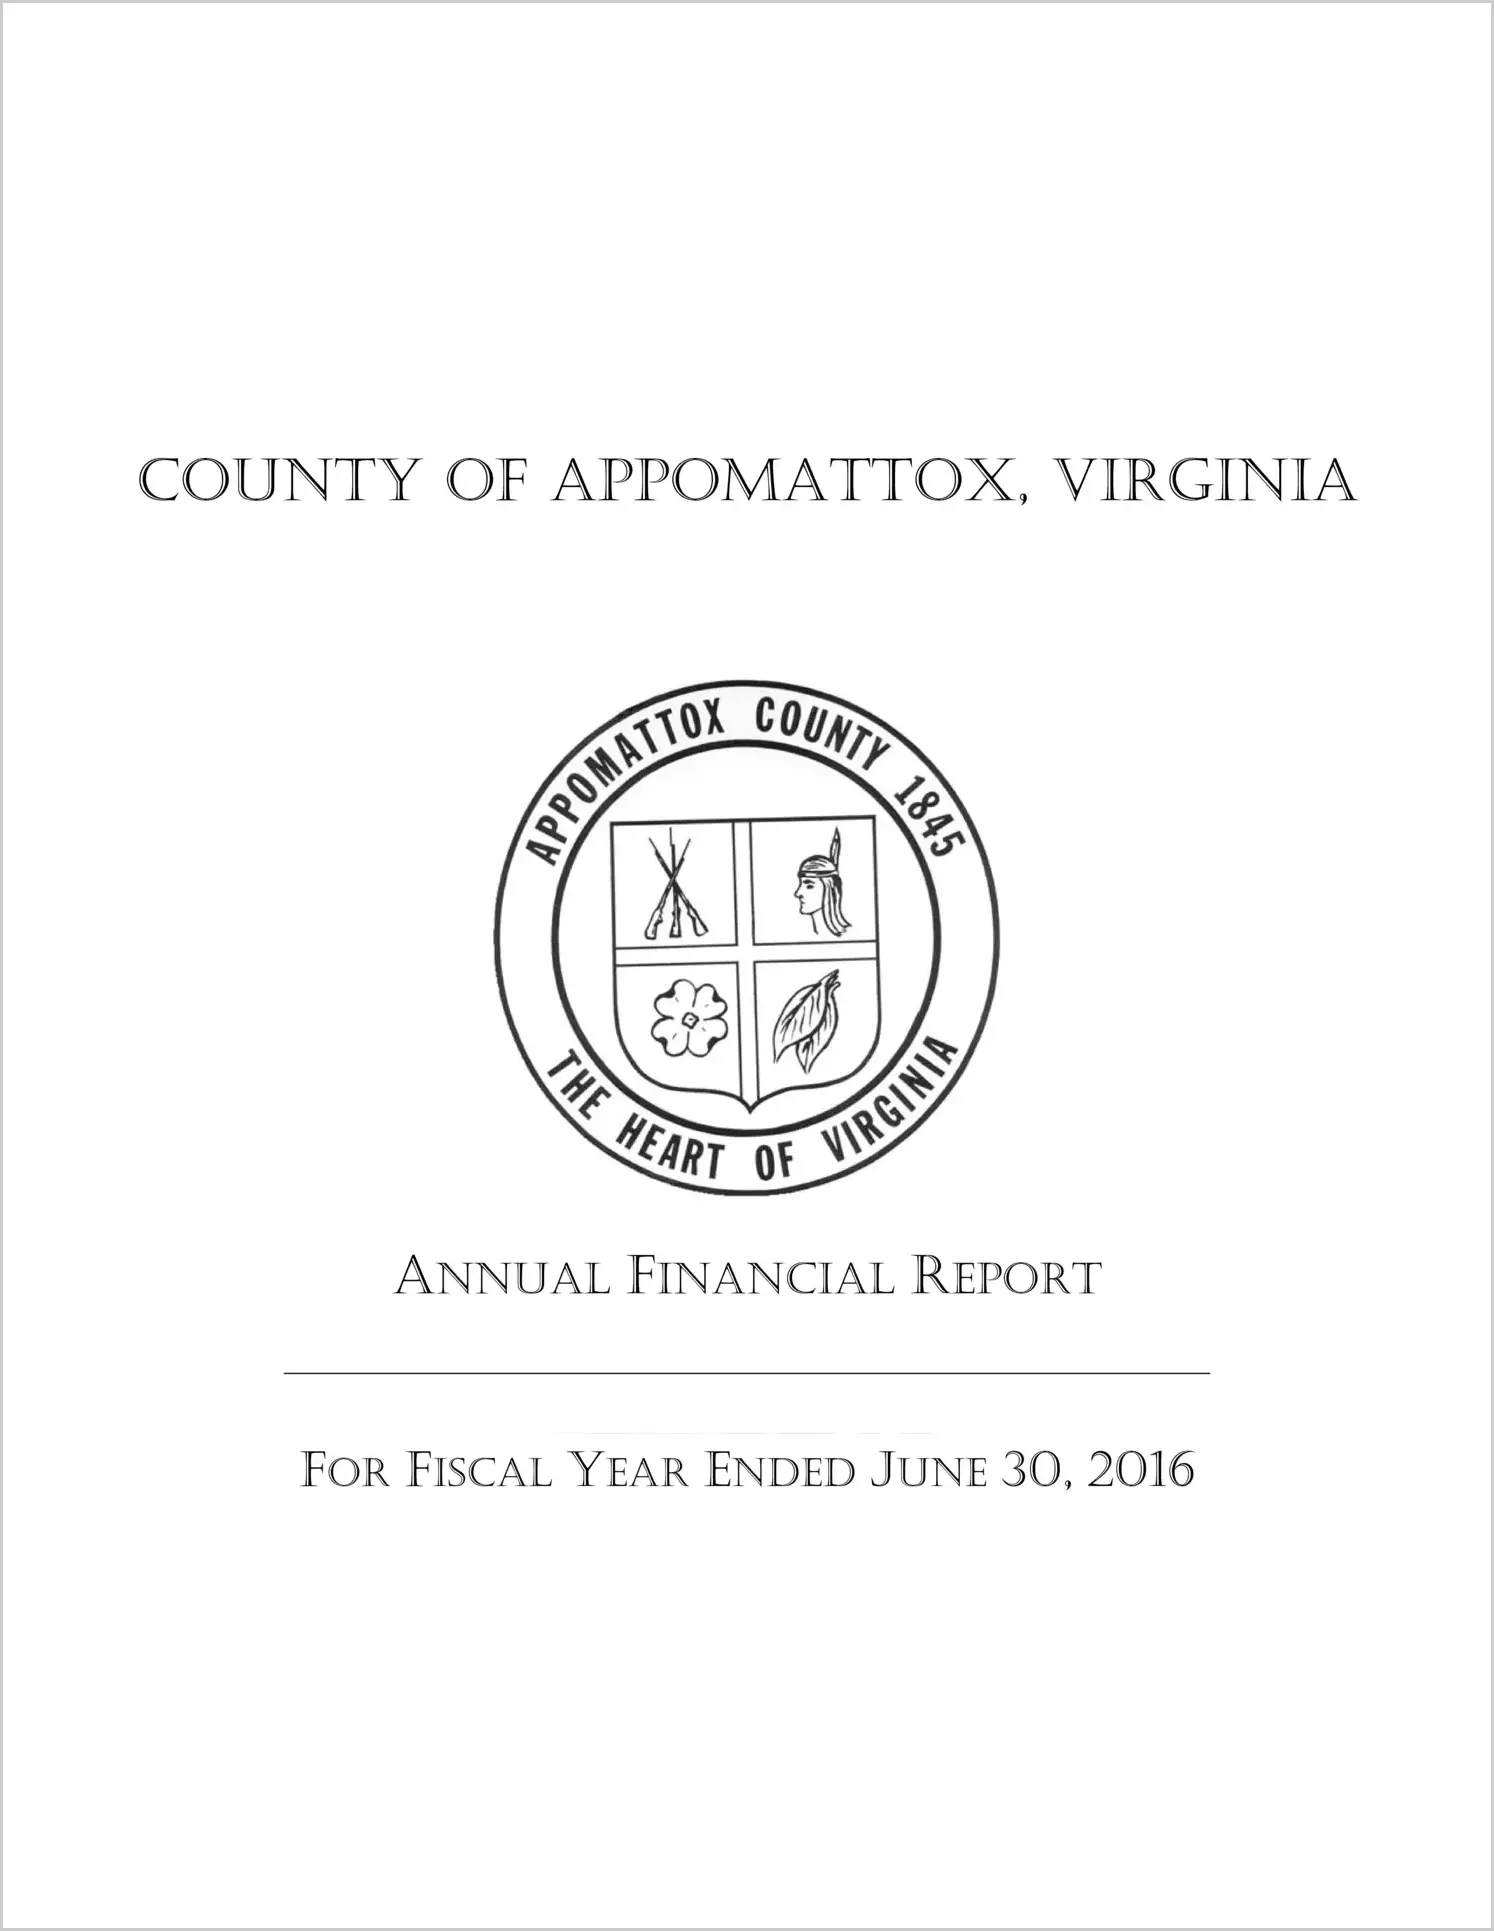 2016 Annual Financial Report for County of Appomattox